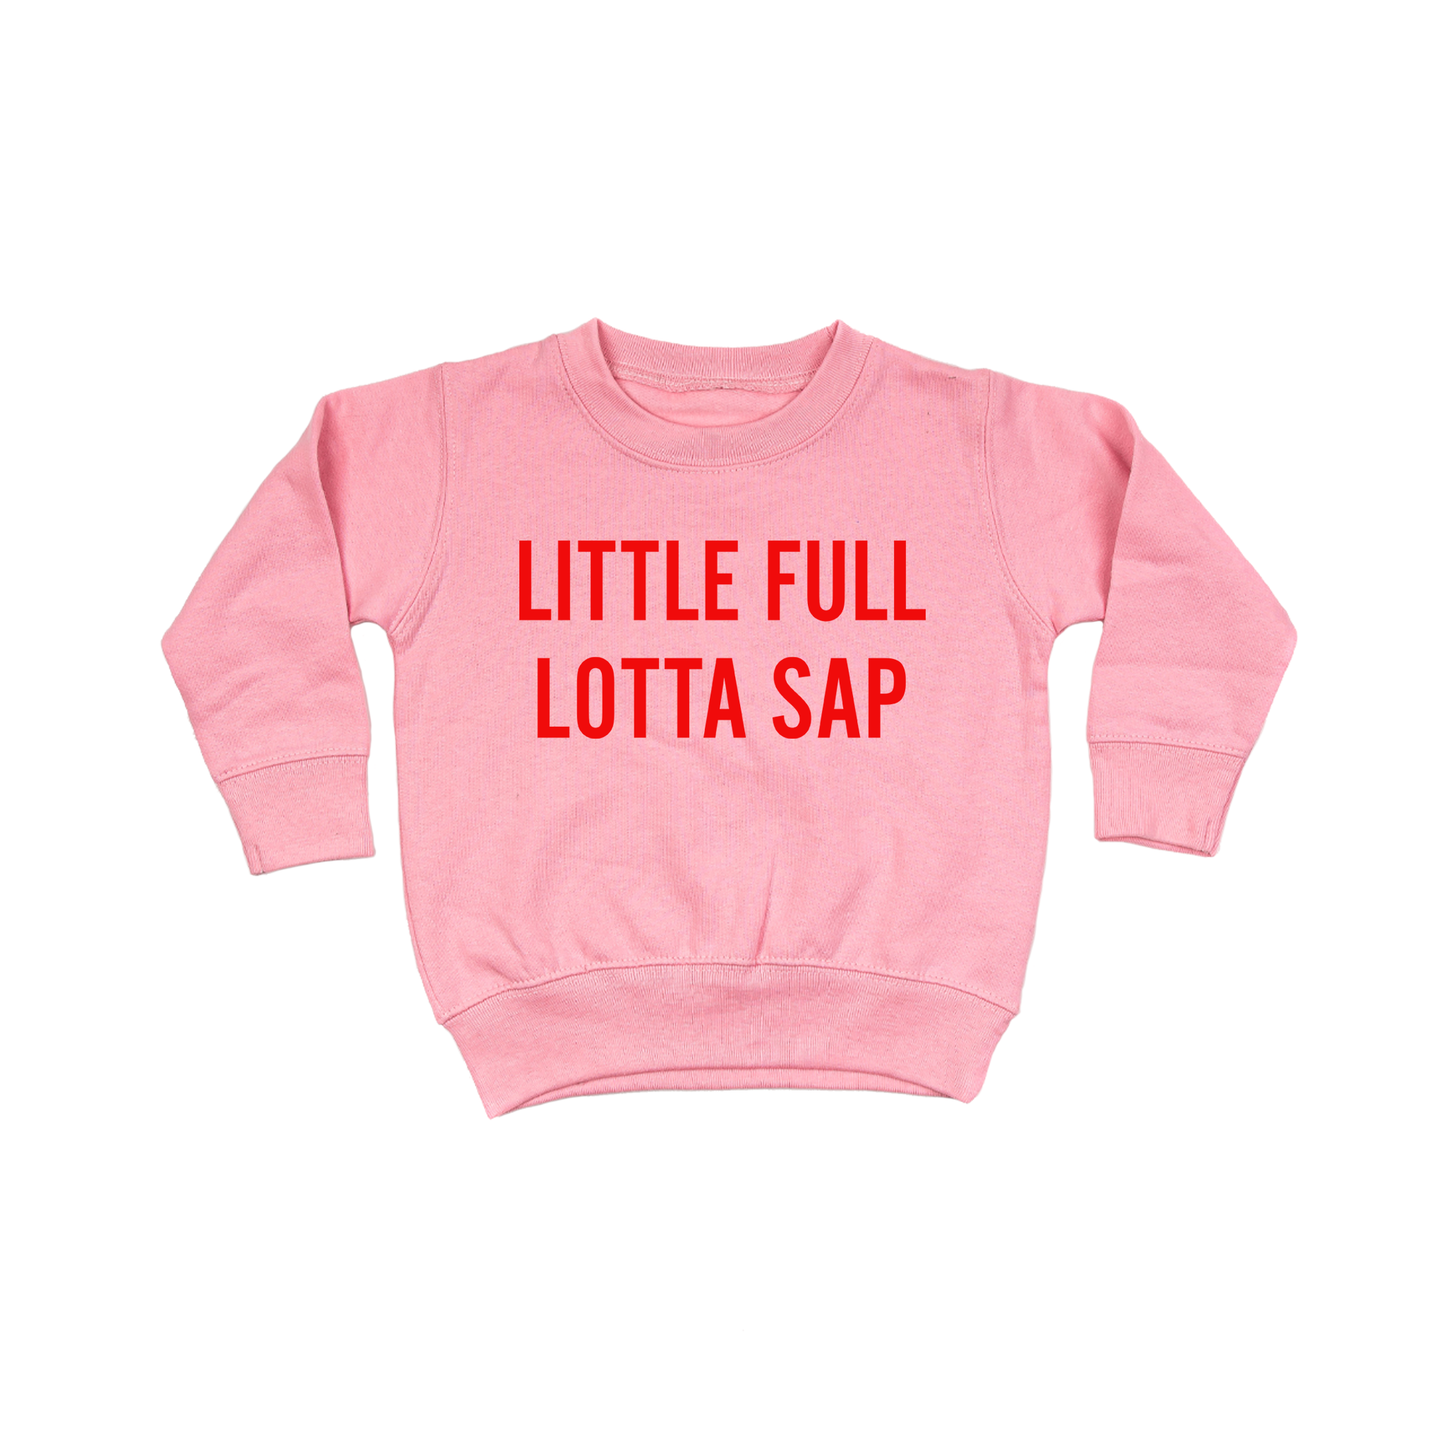 Little Full Lotta Sap (Red) - Kids Sweatshirt (Pink)